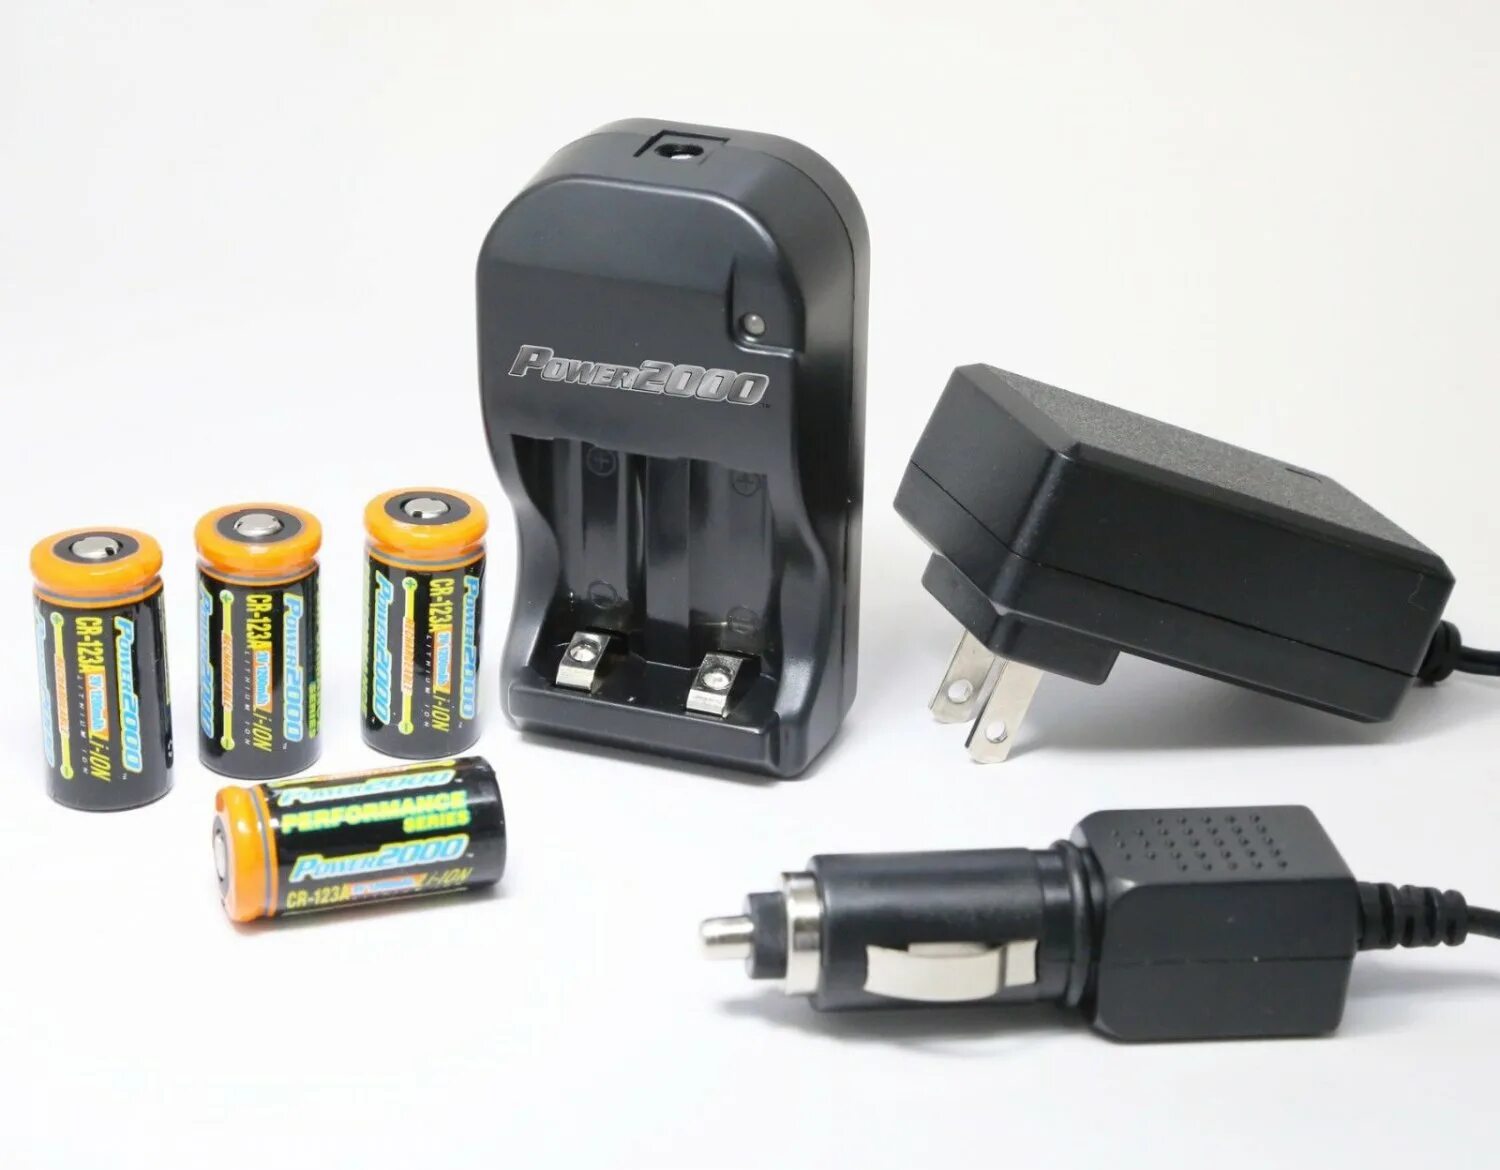 Купить зарядку для батареи. Cr123a Rechargeable. Аккумулятор батарейка cr123a. Аккумулятор cr123a 3.7v. Зарядное устройство для аккумулятора cr123a.